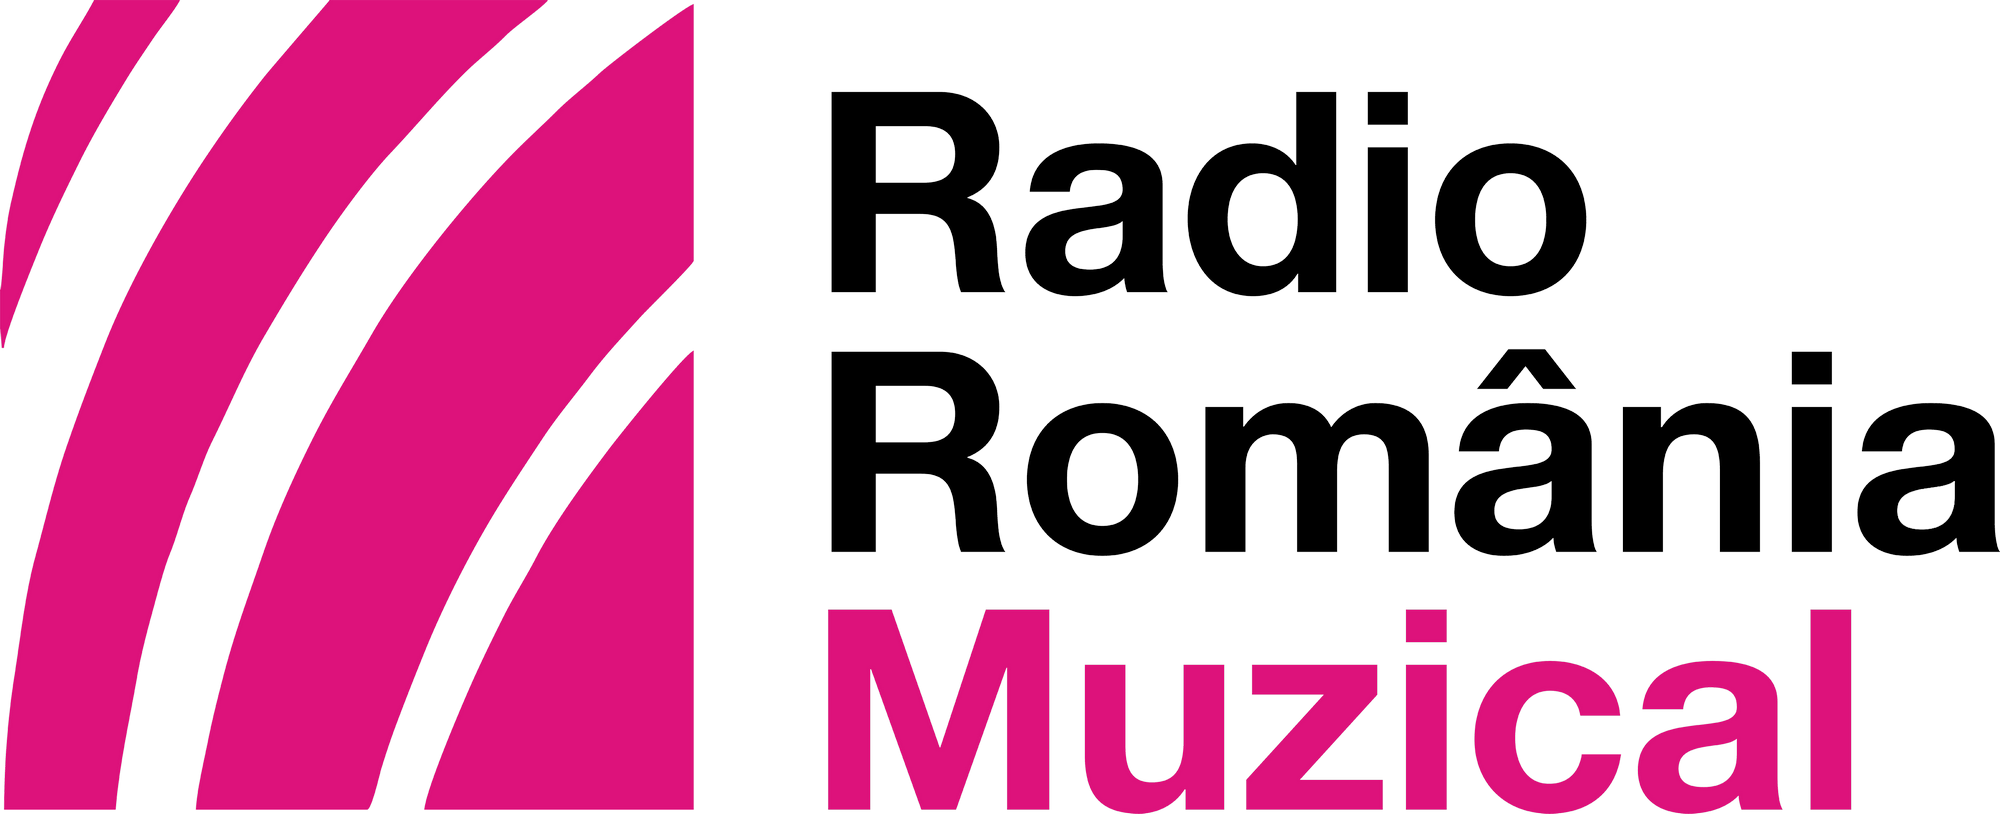 Asentar vestirse Viajero Radio România Muzical — Википедия